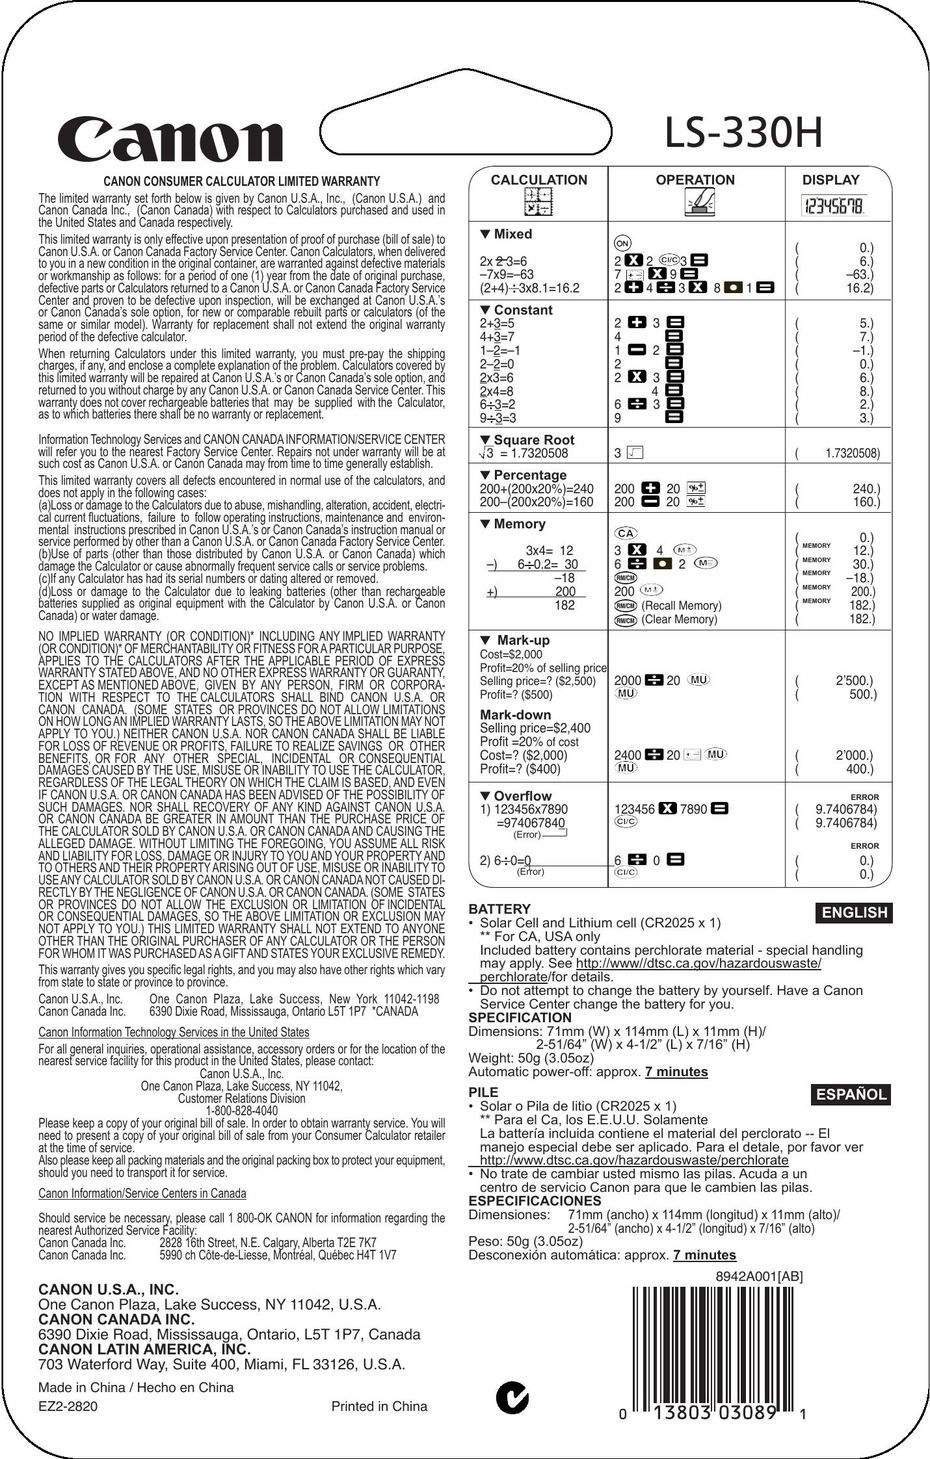 Canon LS-330H Calculator User Manual